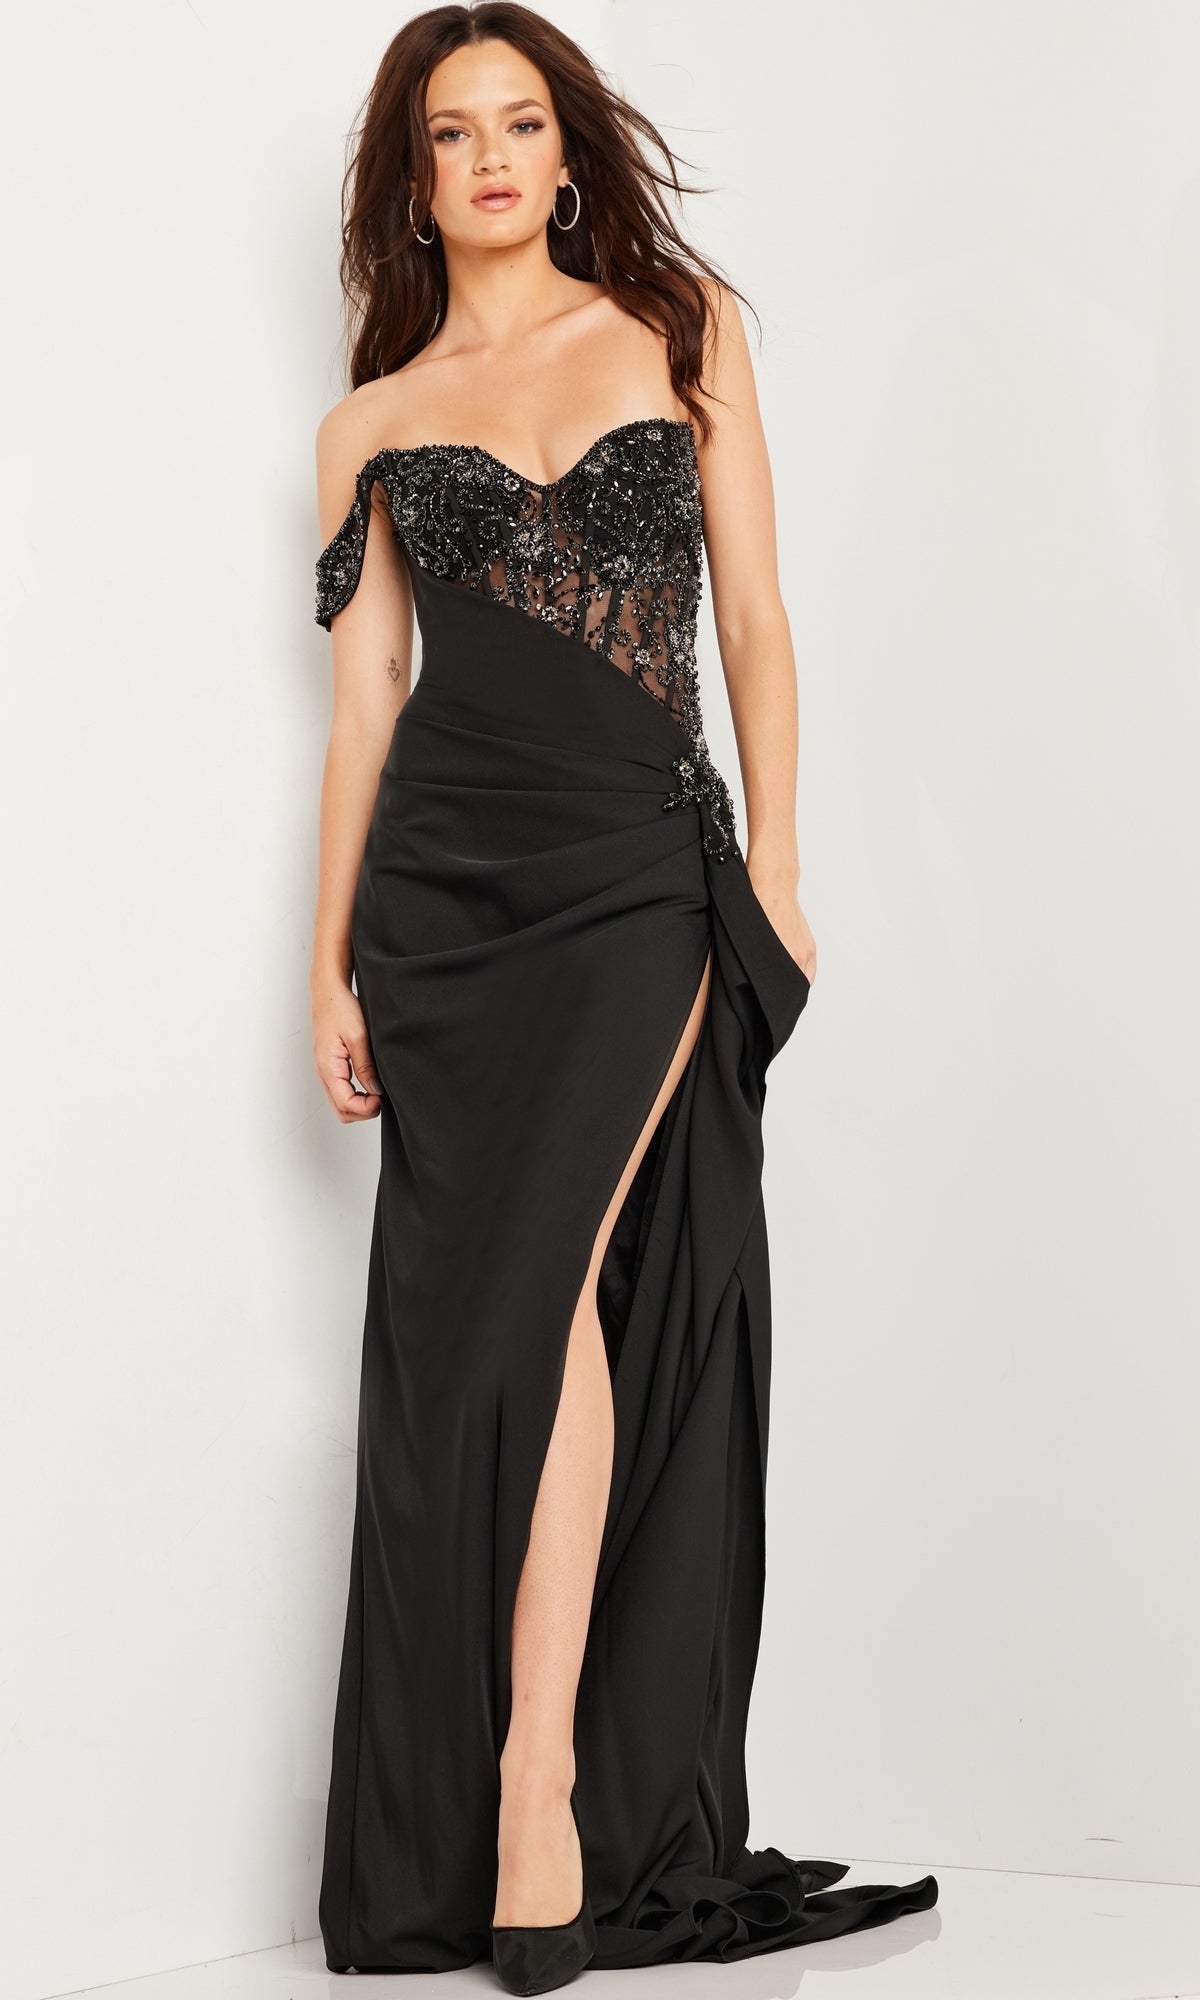  Formal Long Dress 37094 by Jovani